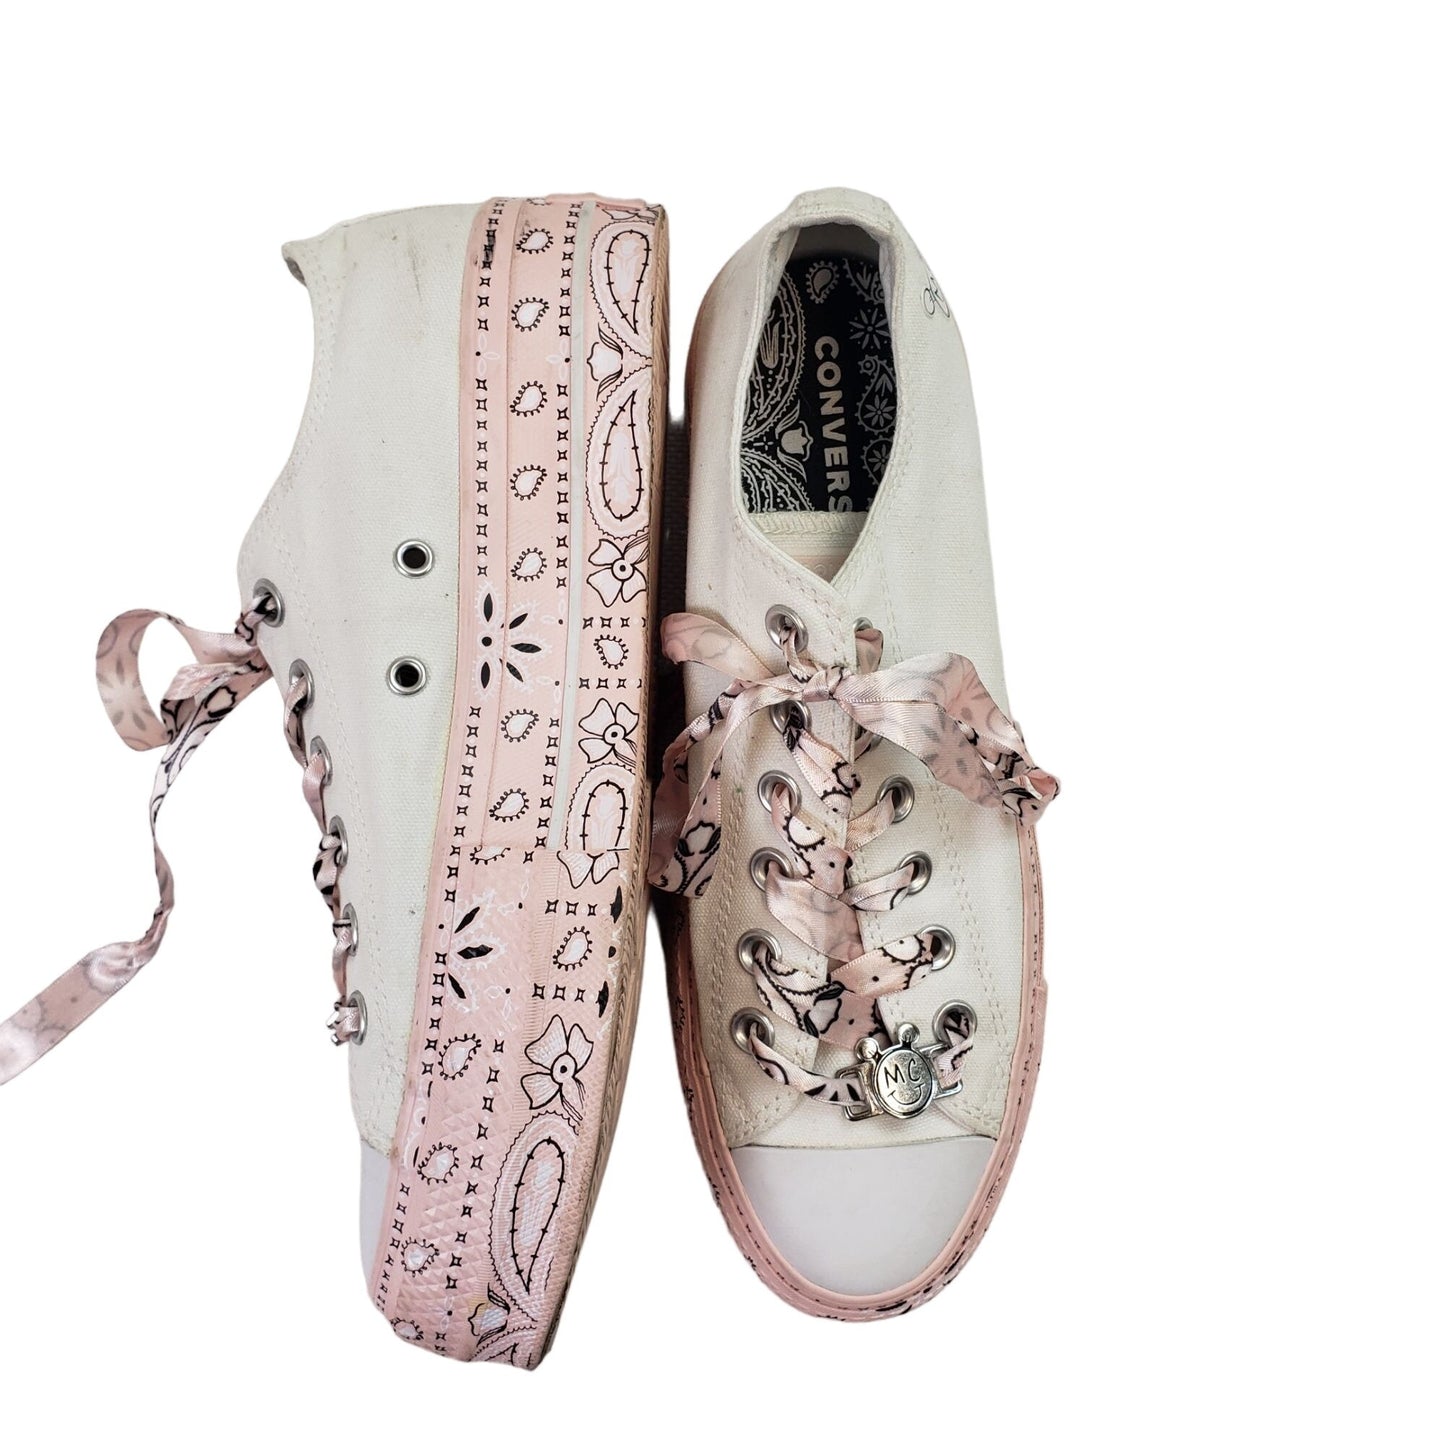 Converse x Miley Cyrus Limited Ed. Platform Sneakers White/Pink Bandana Size 7.5